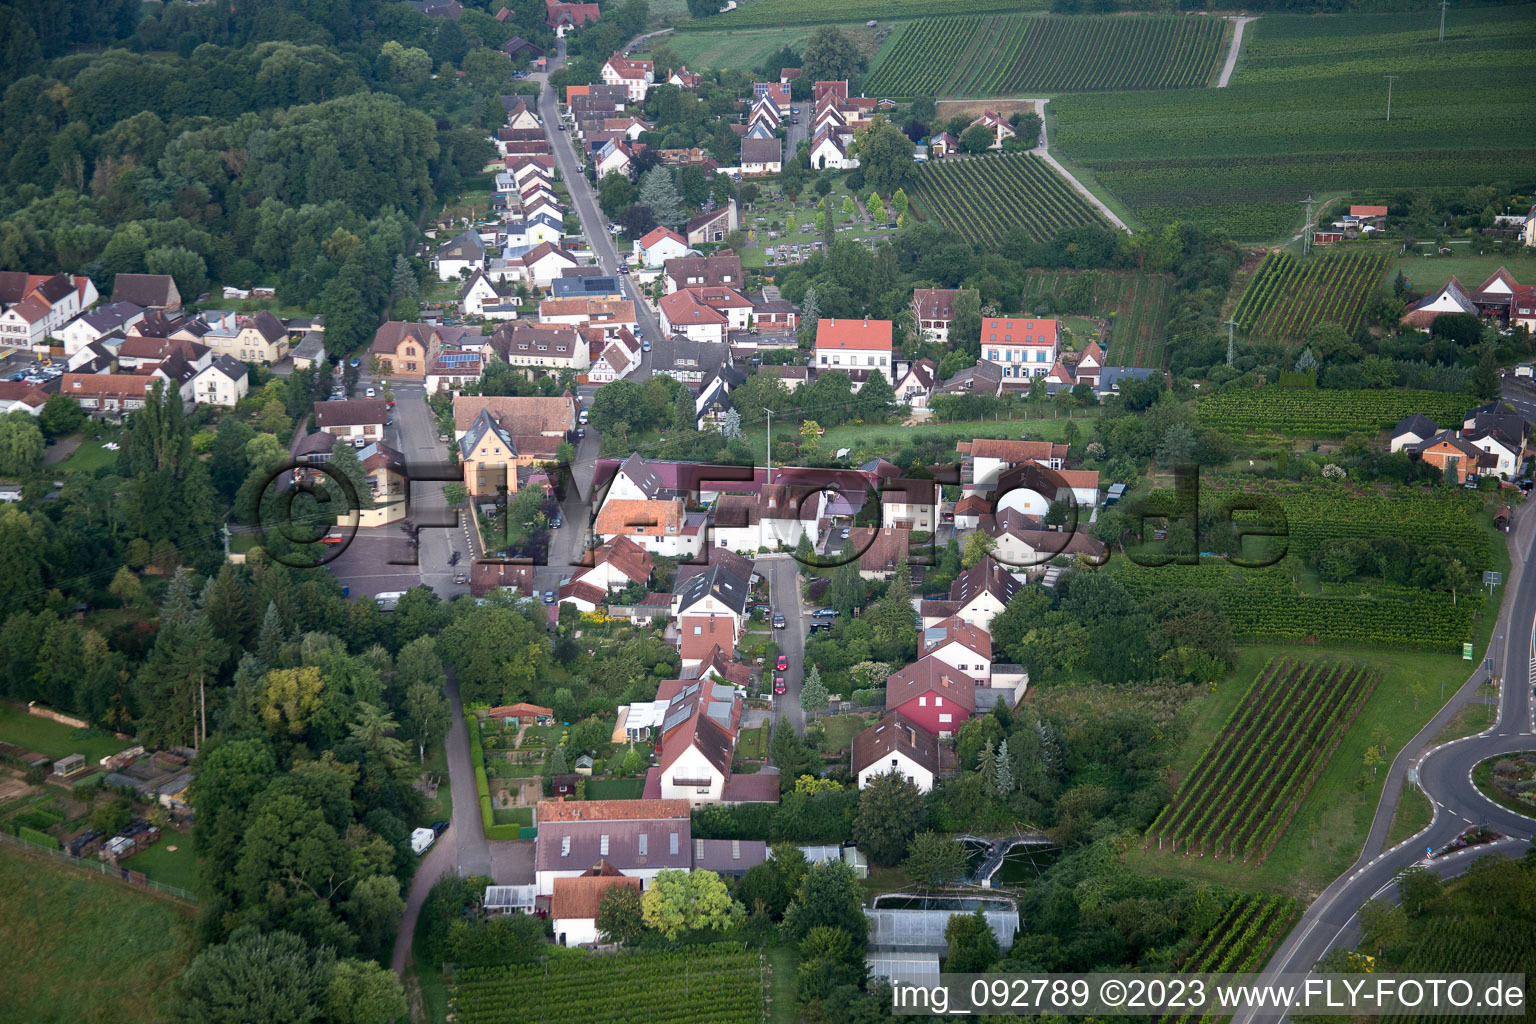 Drone image of District Ingenheim in Billigheim-Ingenheim in the state Rhineland-Palatinate, Germany